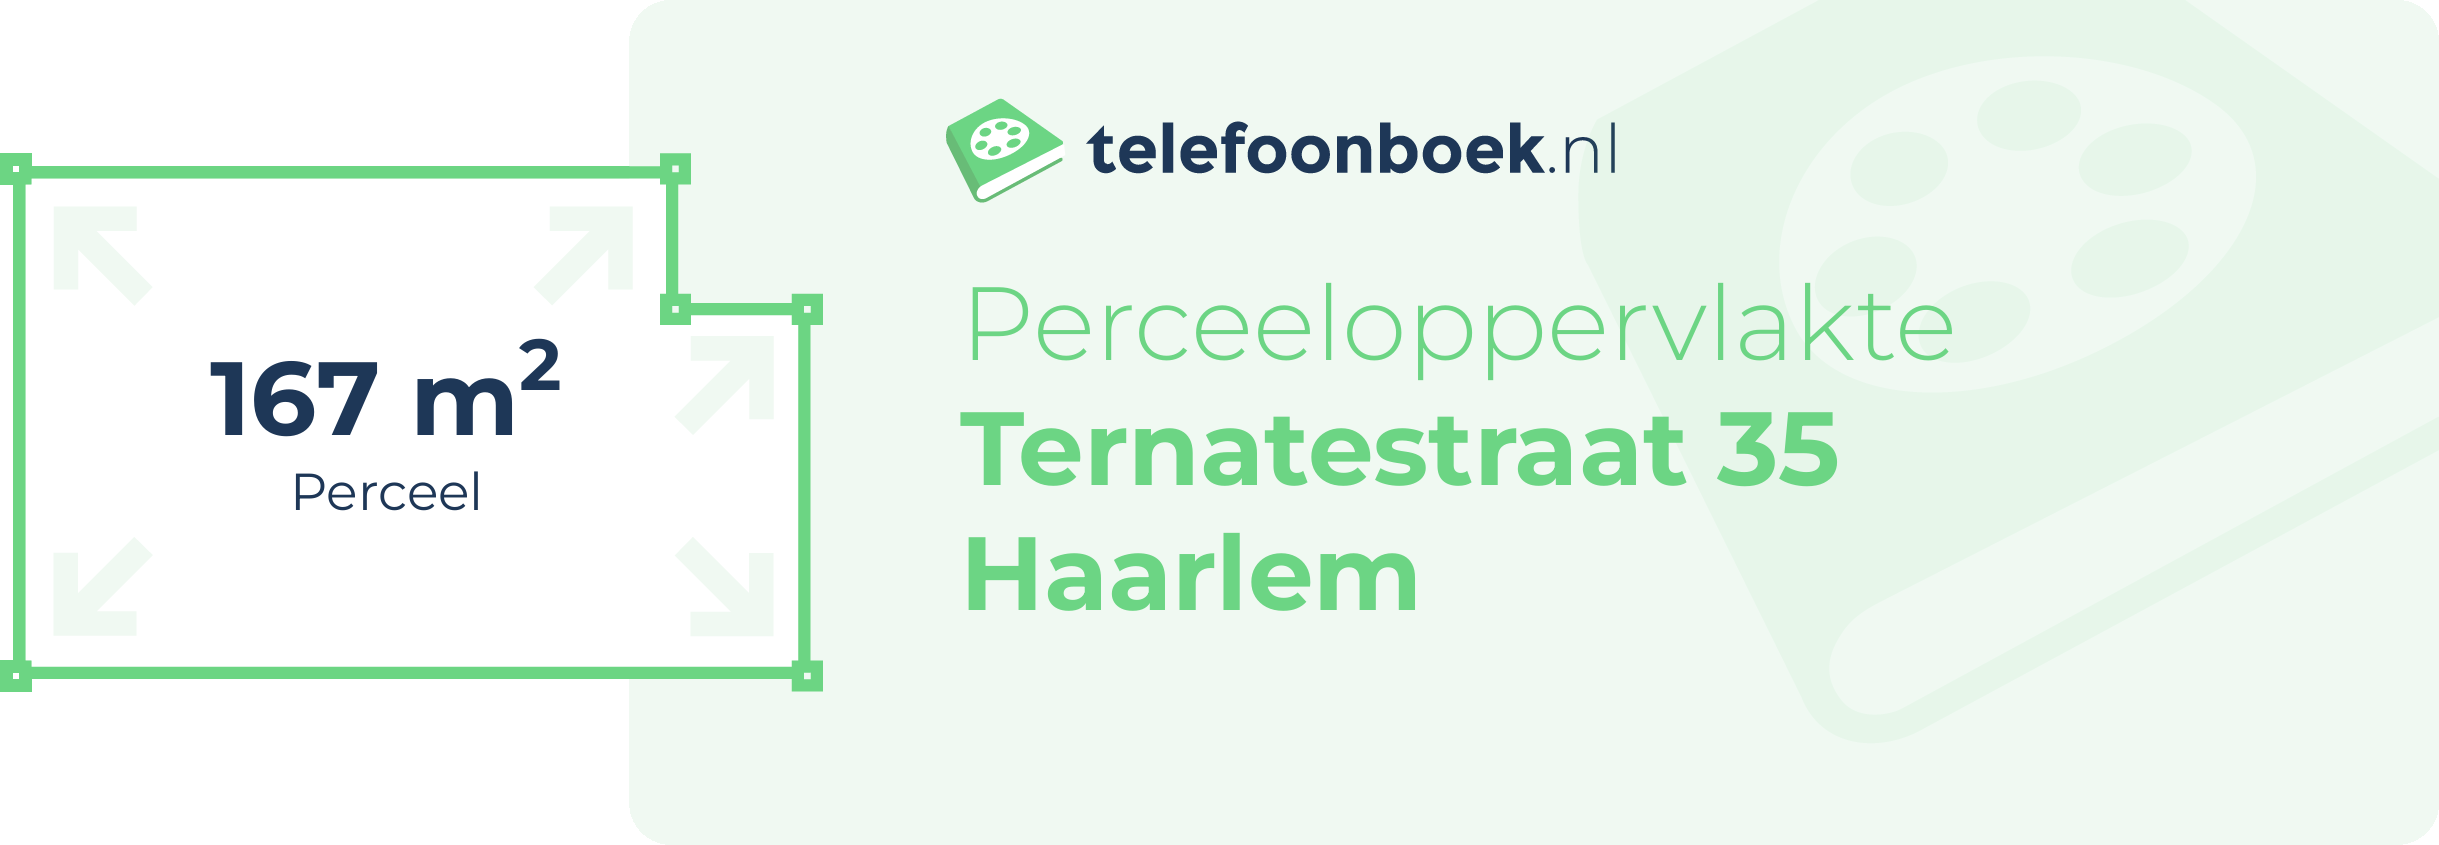 Perceeloppervlakte Ternatestraat 35 Haarlem